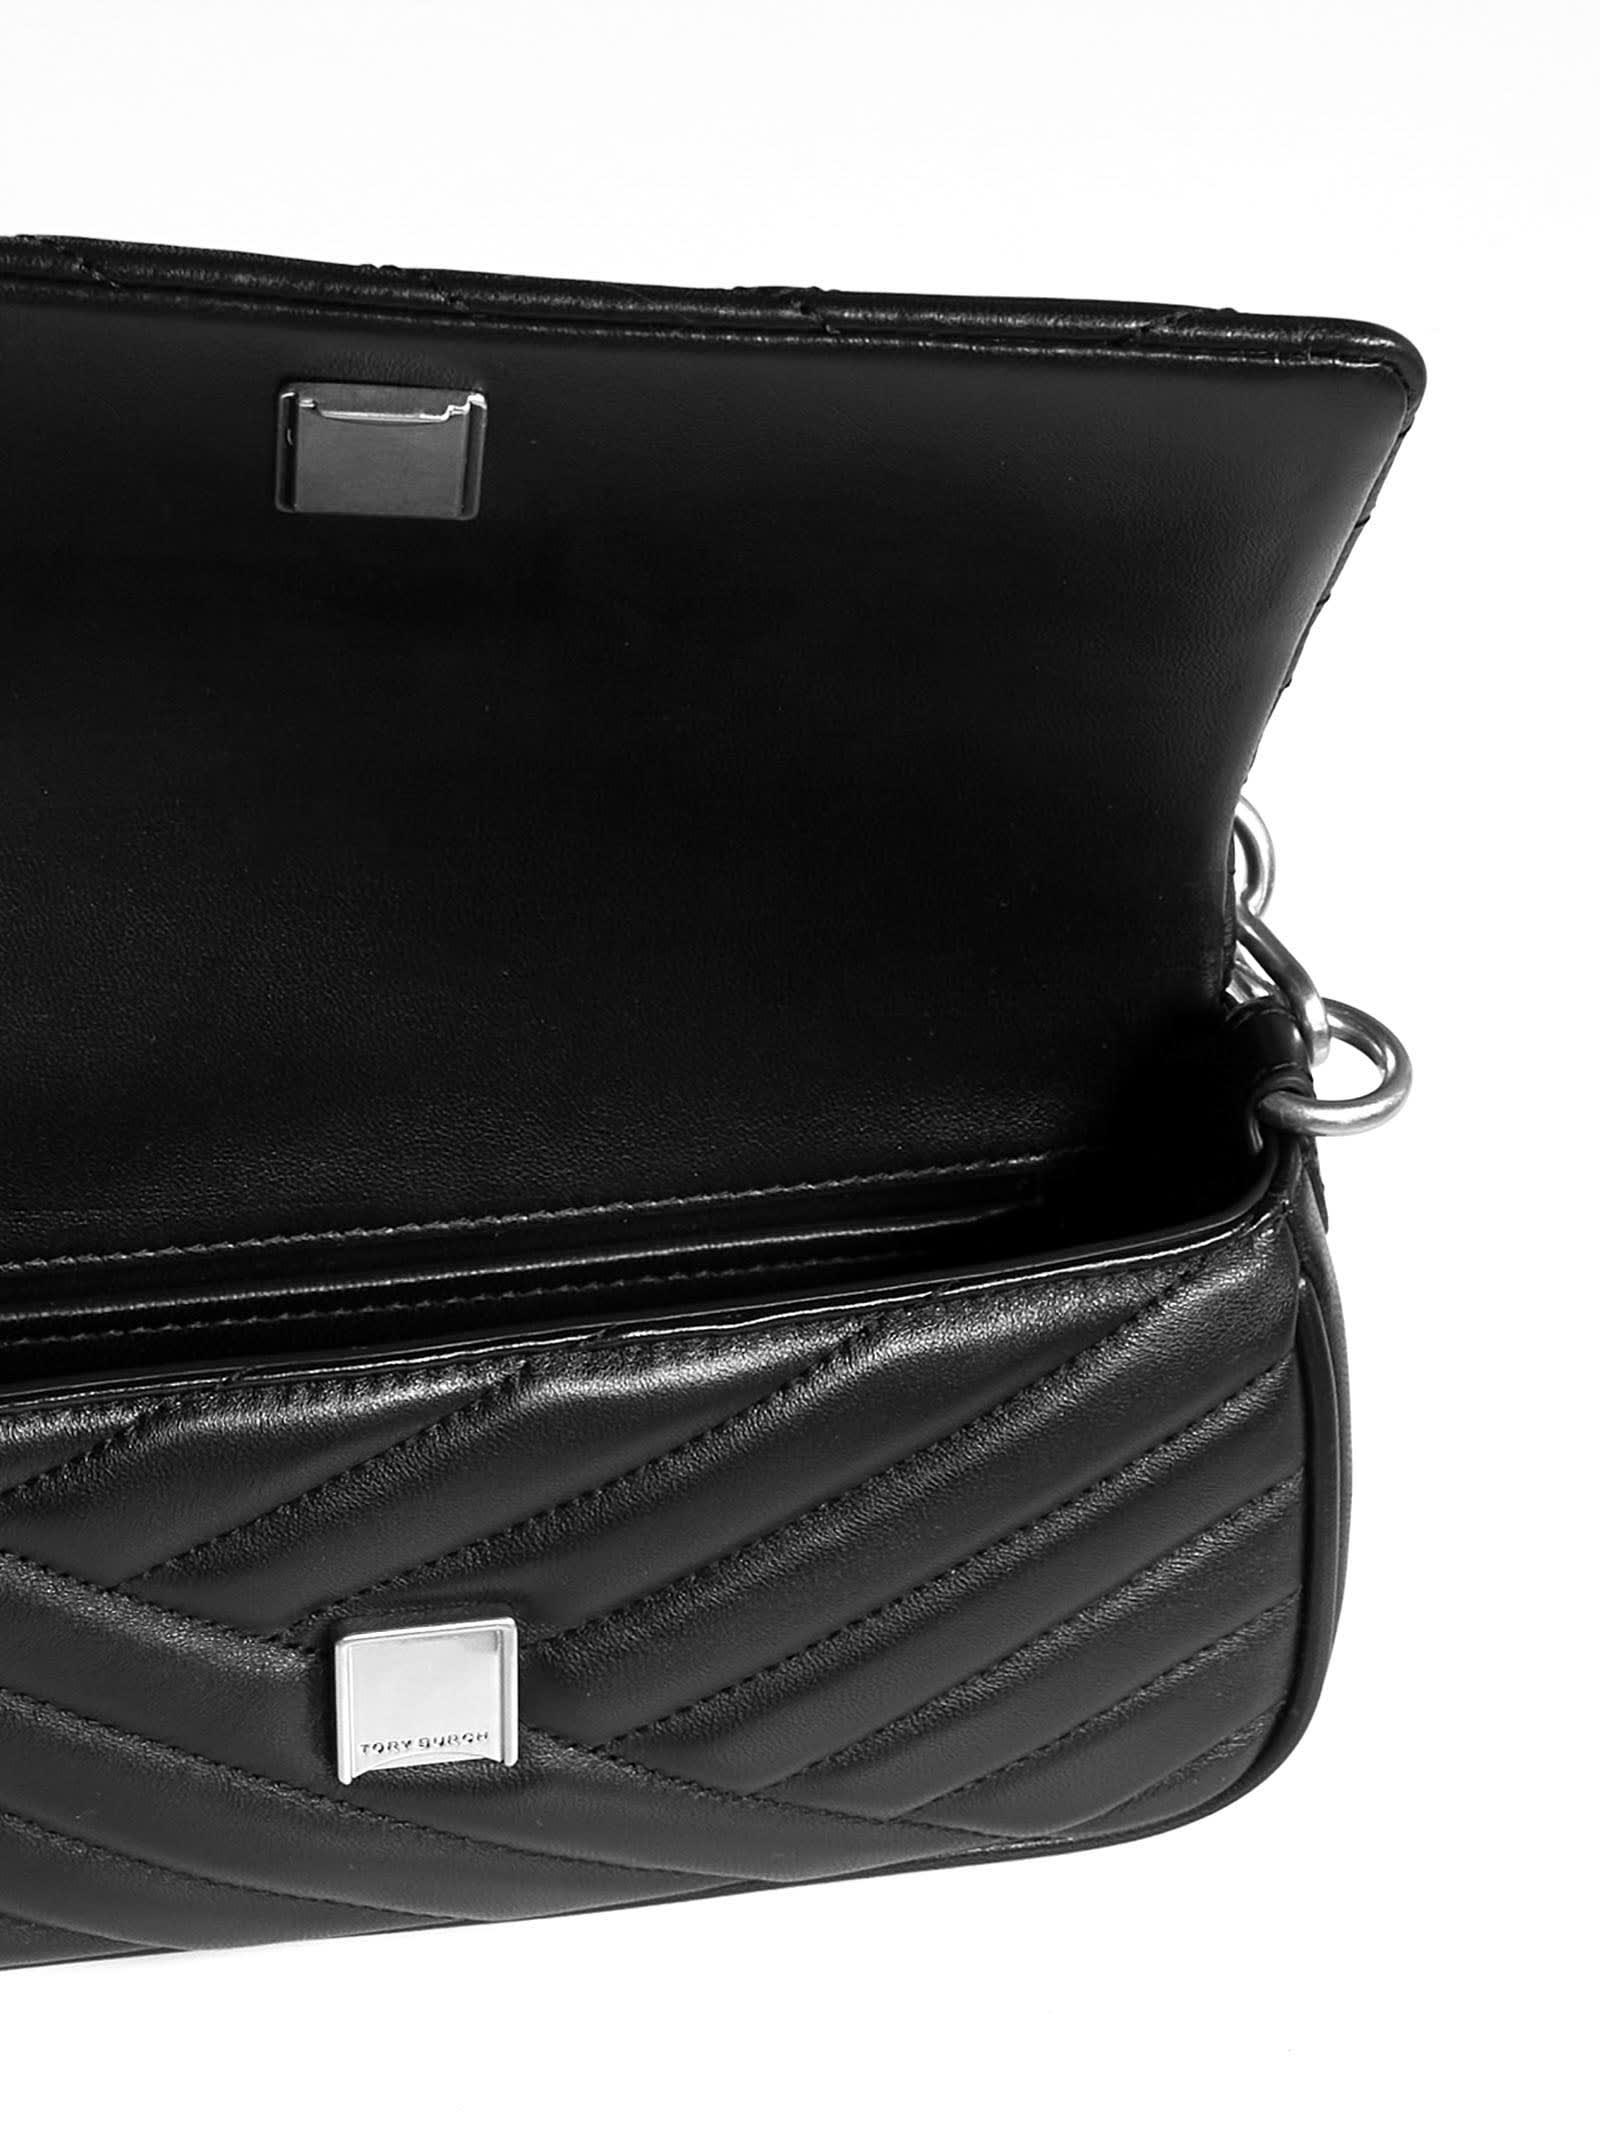 448$ Tory Burch Black Mini Kira Chevron Small Flap Shoulder Bag Black  Quilted